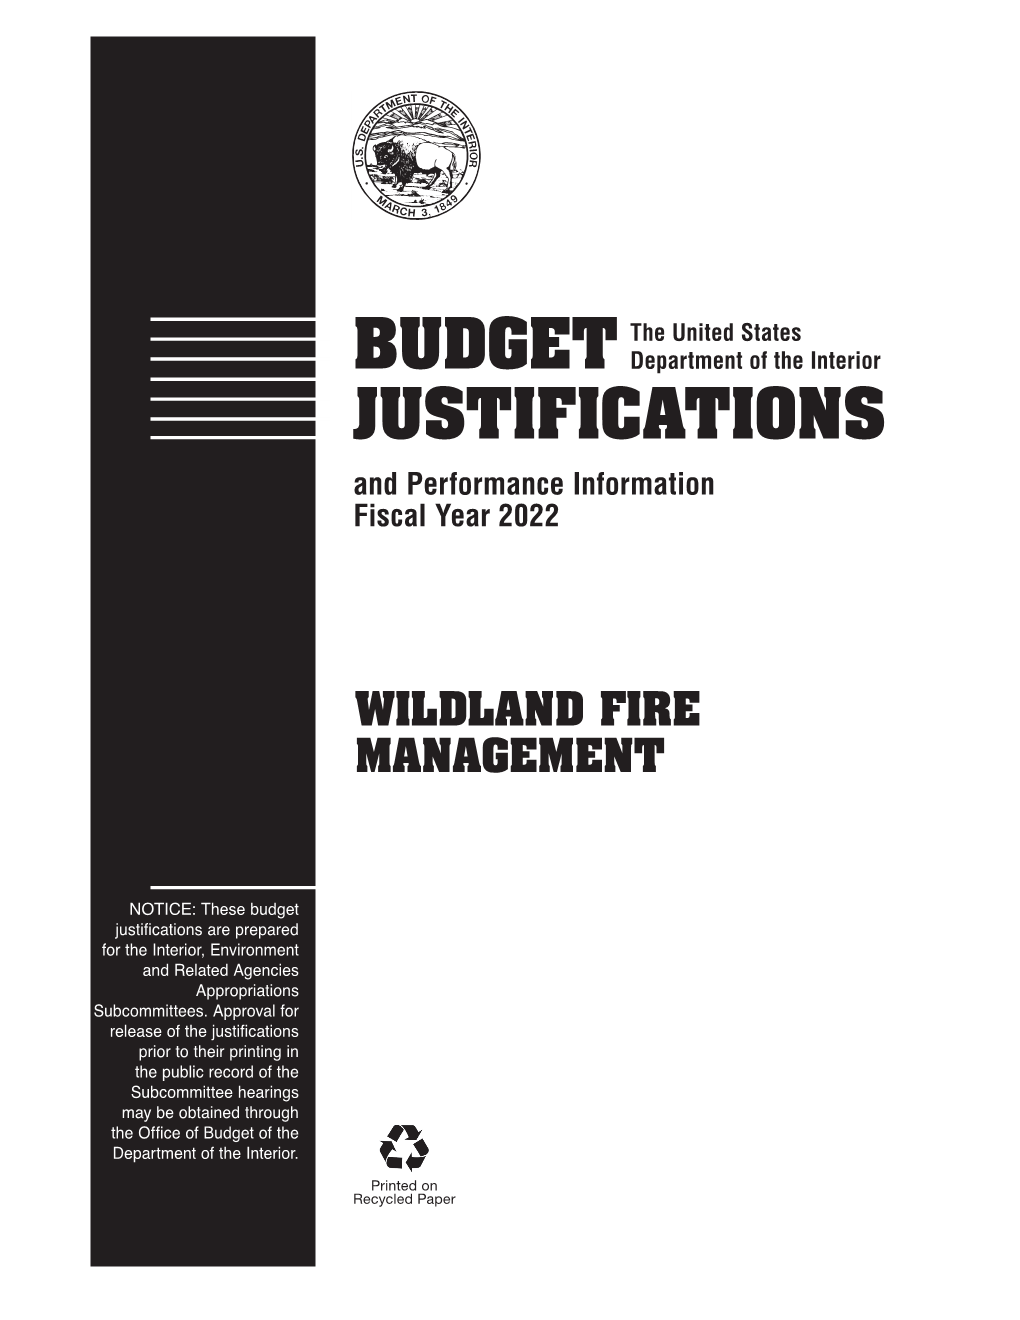 Budget Justification Wildland Fire Management FY2022